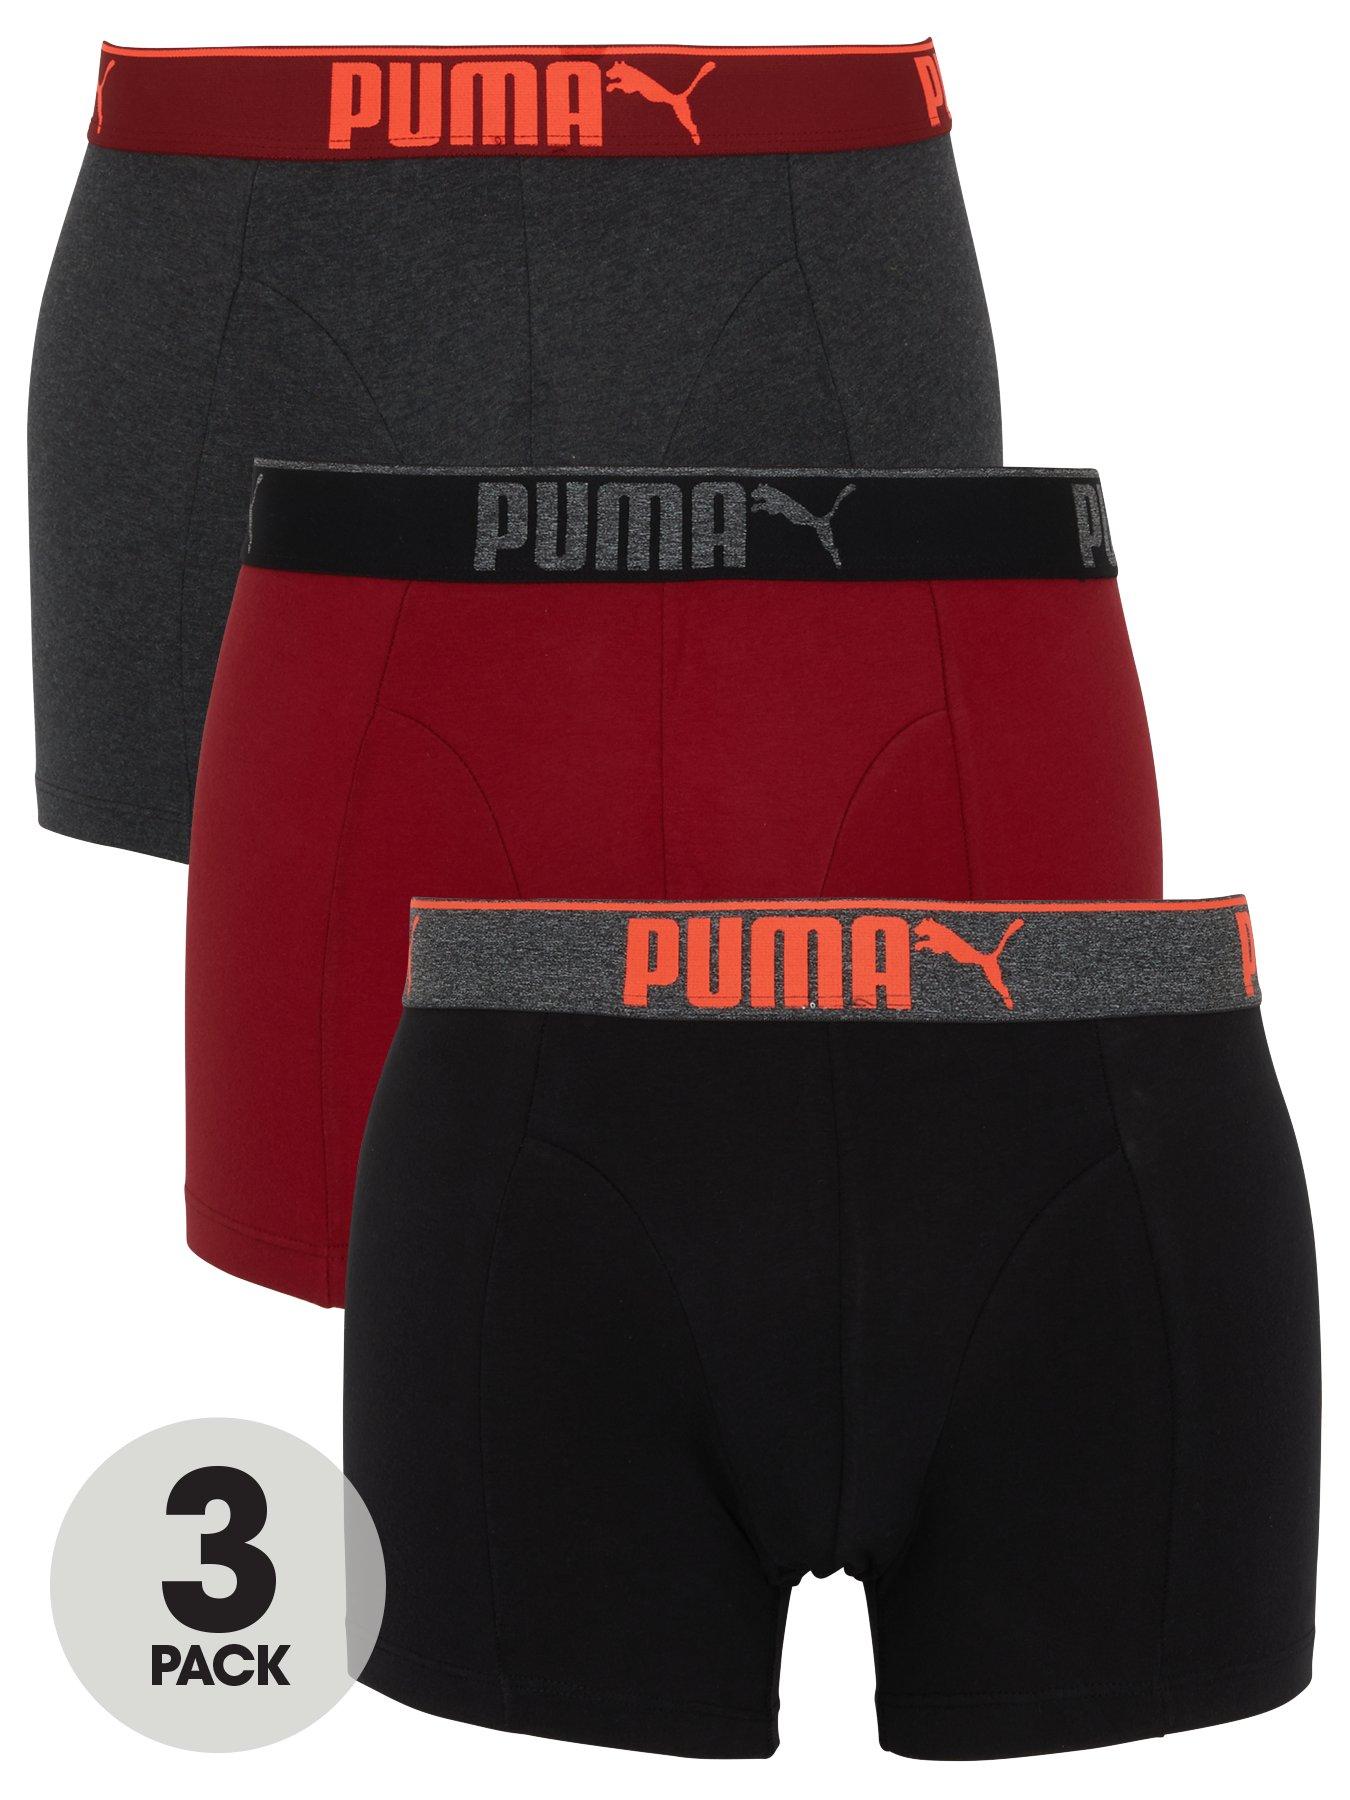 puma boxershorts 3 pack